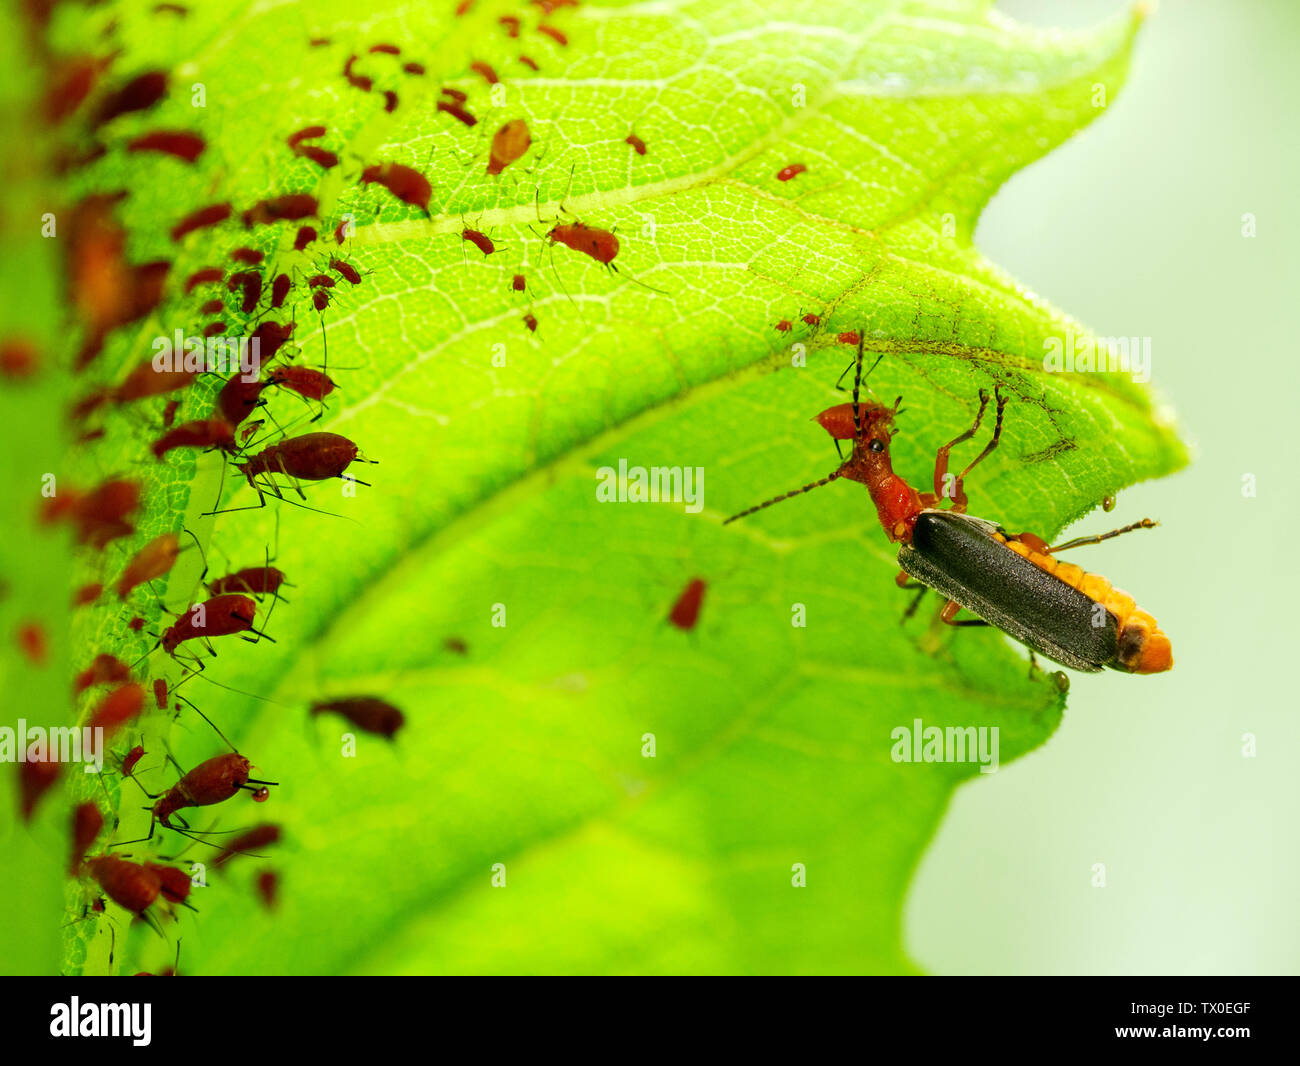 Leatherwing lanuginosa o soldato beetle (Pdabrus tomentosus), attaccando un afide. Foto Stock